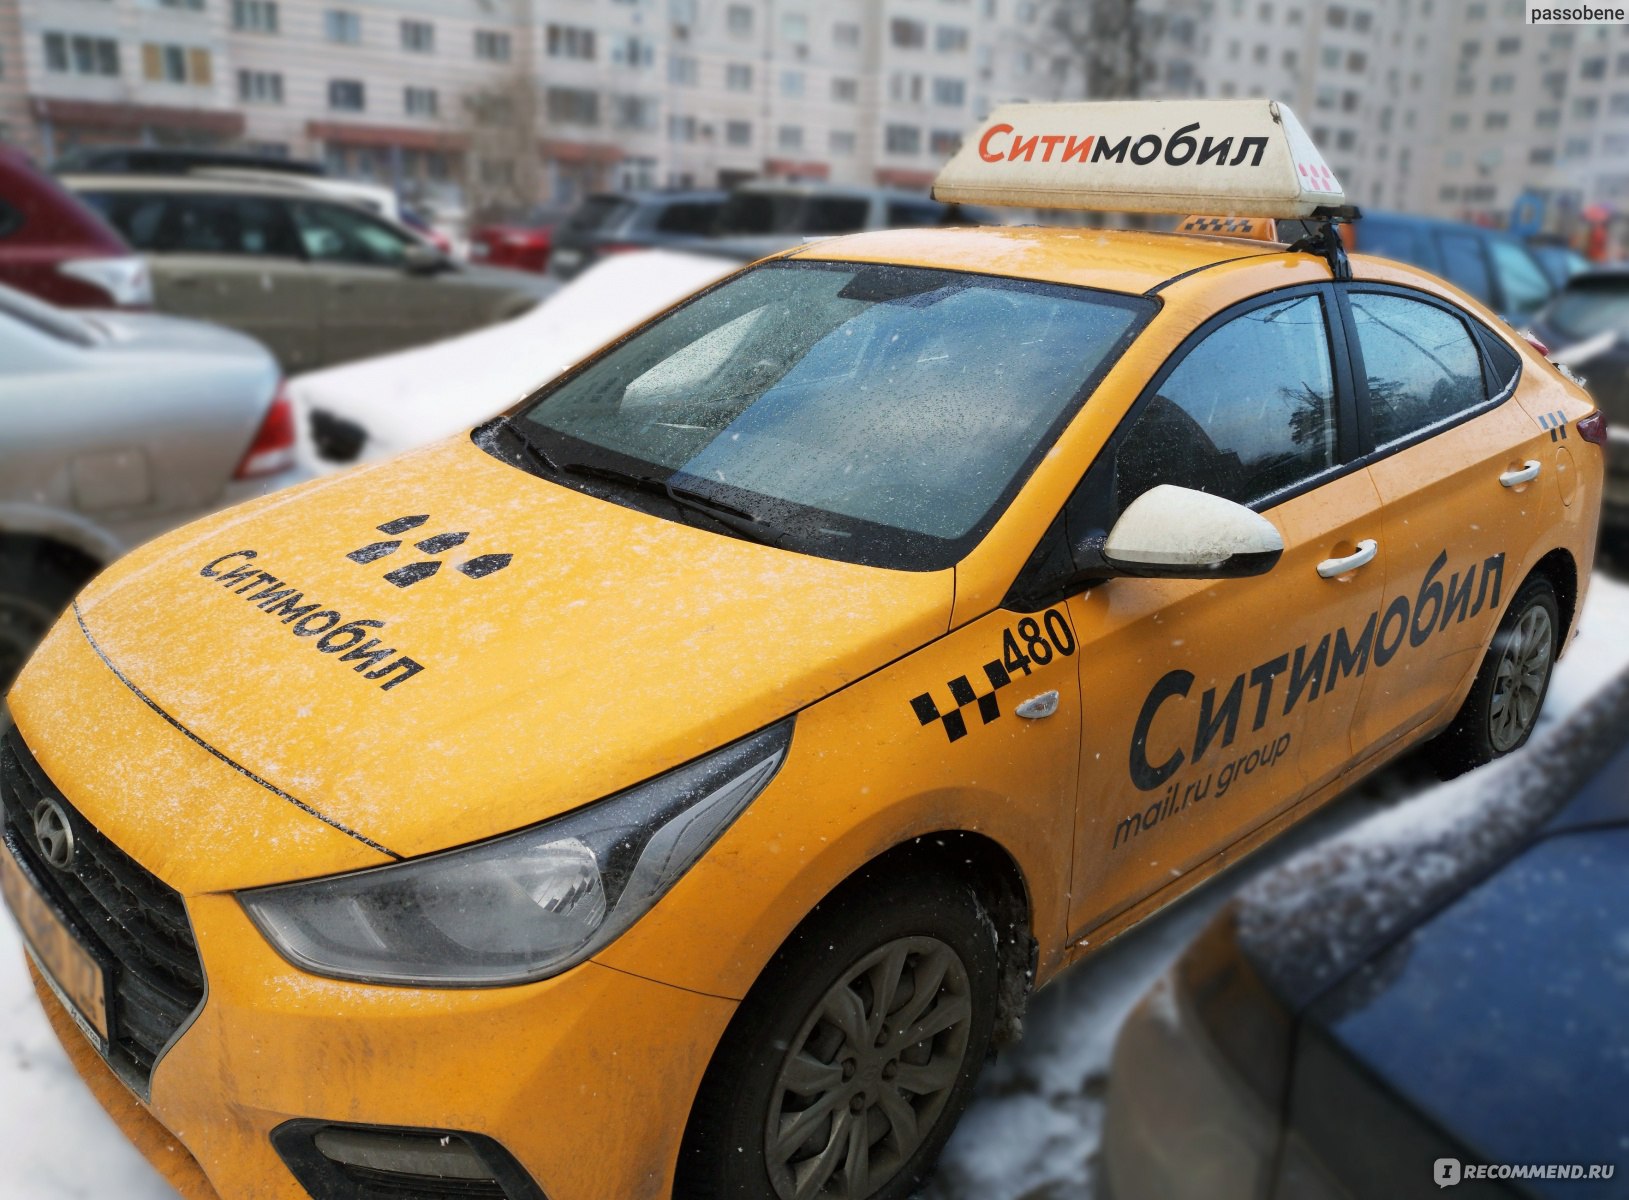 Такси Ситимобил в Москве